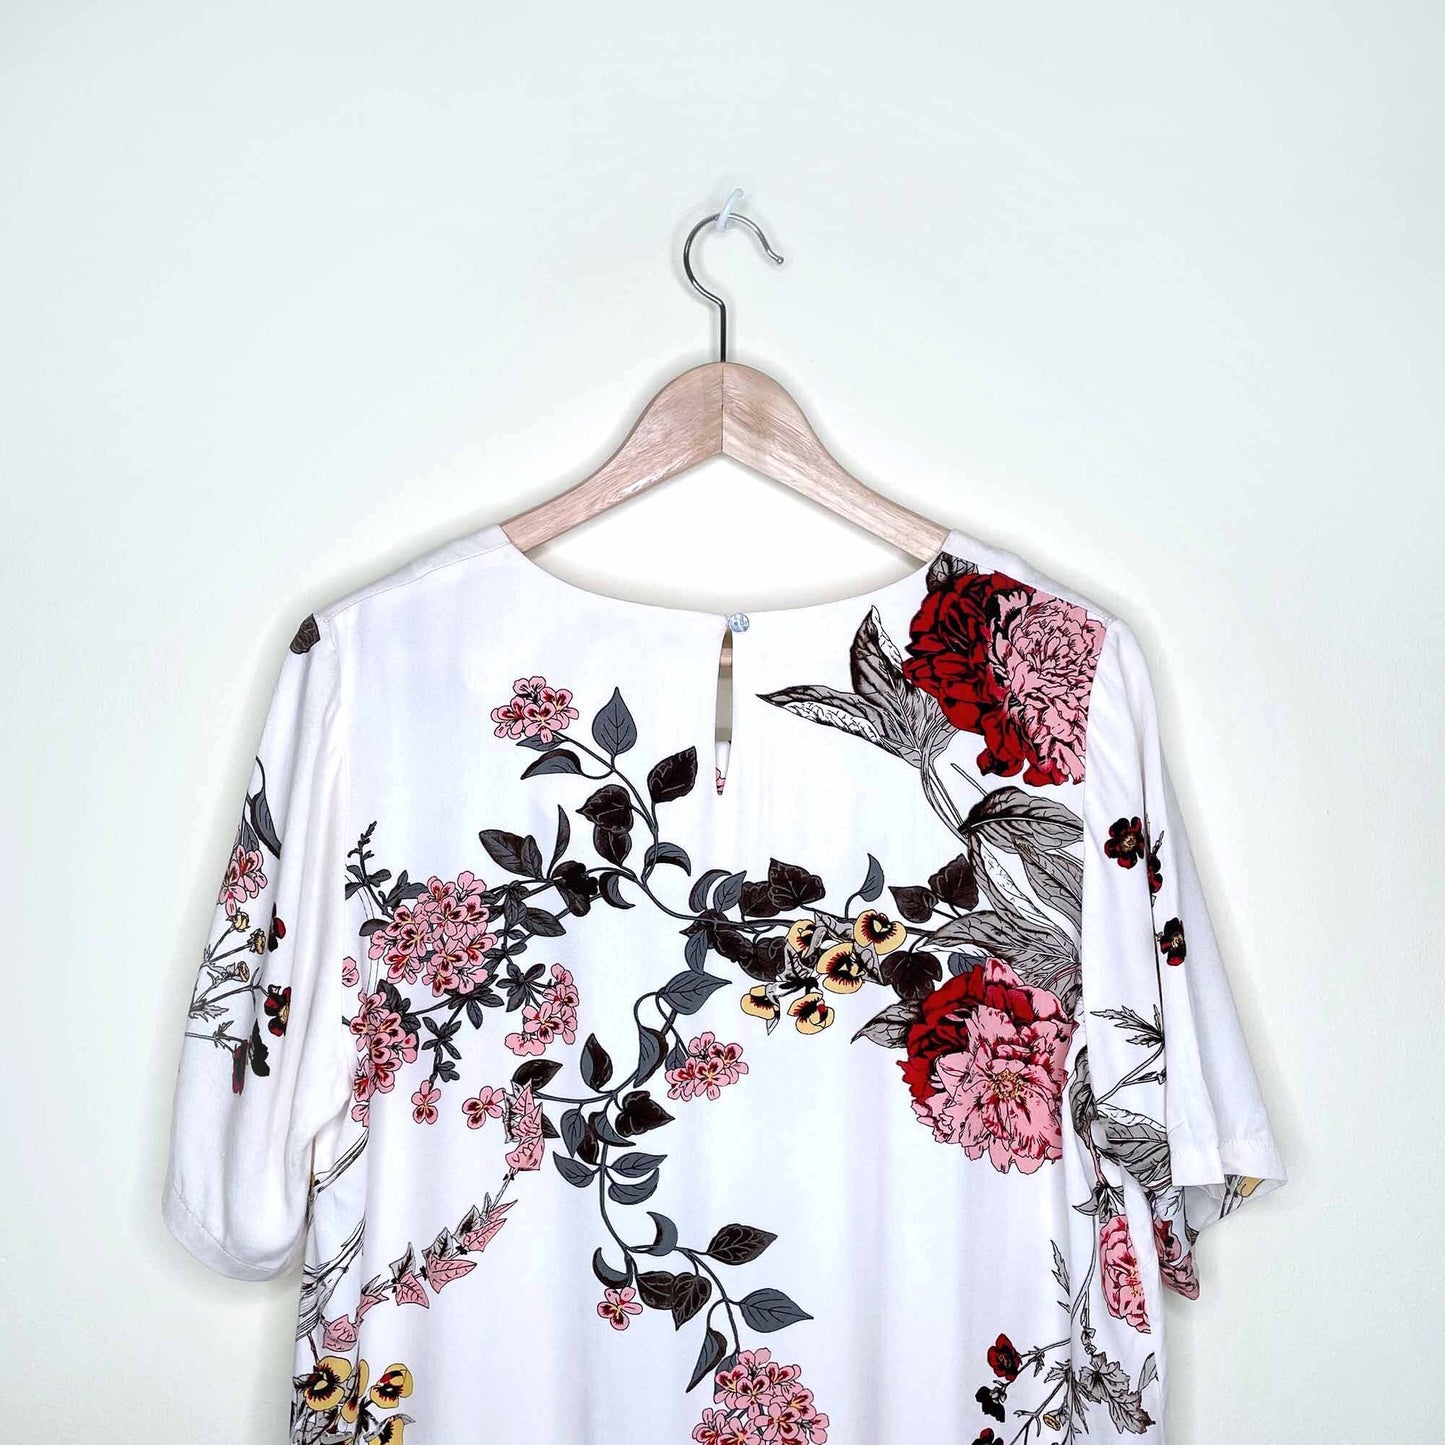 nwt soulmate pixi 2 japanese floral dress - size medium